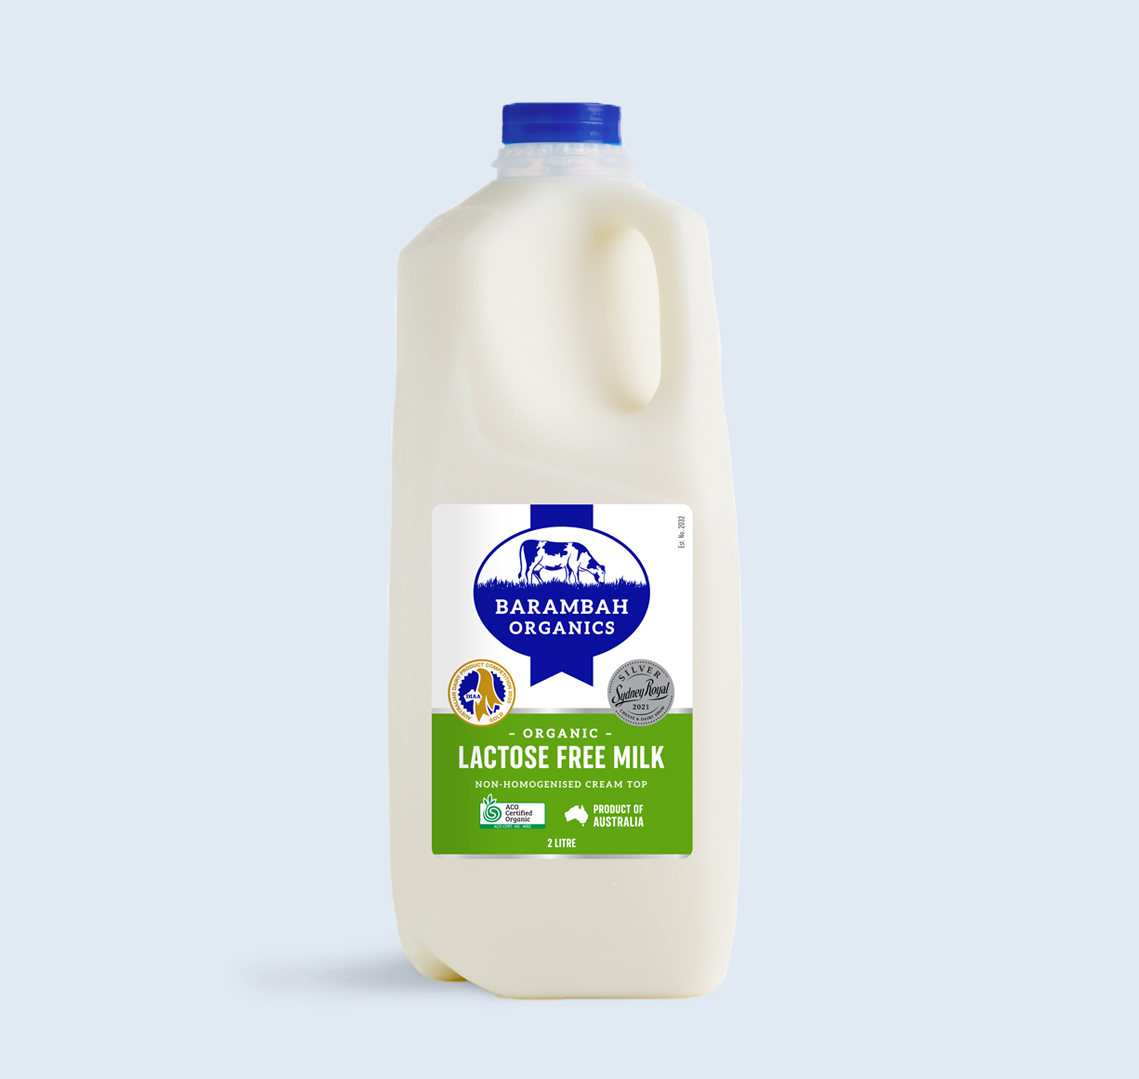 2 Liters of Lactose Free Milk - Barambah Lactose Free Milk - Barambah Organics